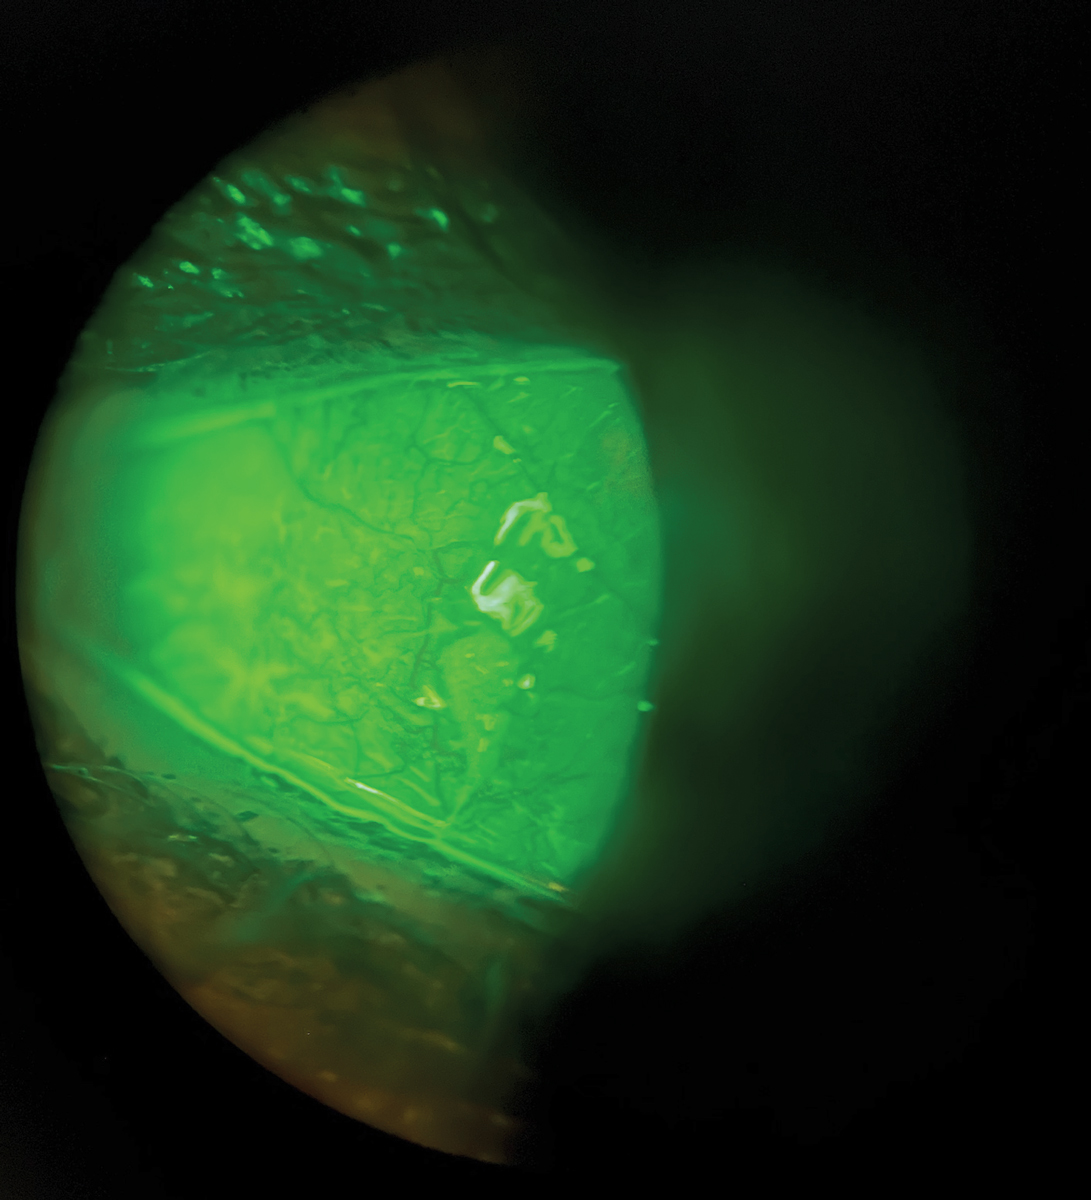 Fluorescein staining in allergic conjunctivitis with dry eye.